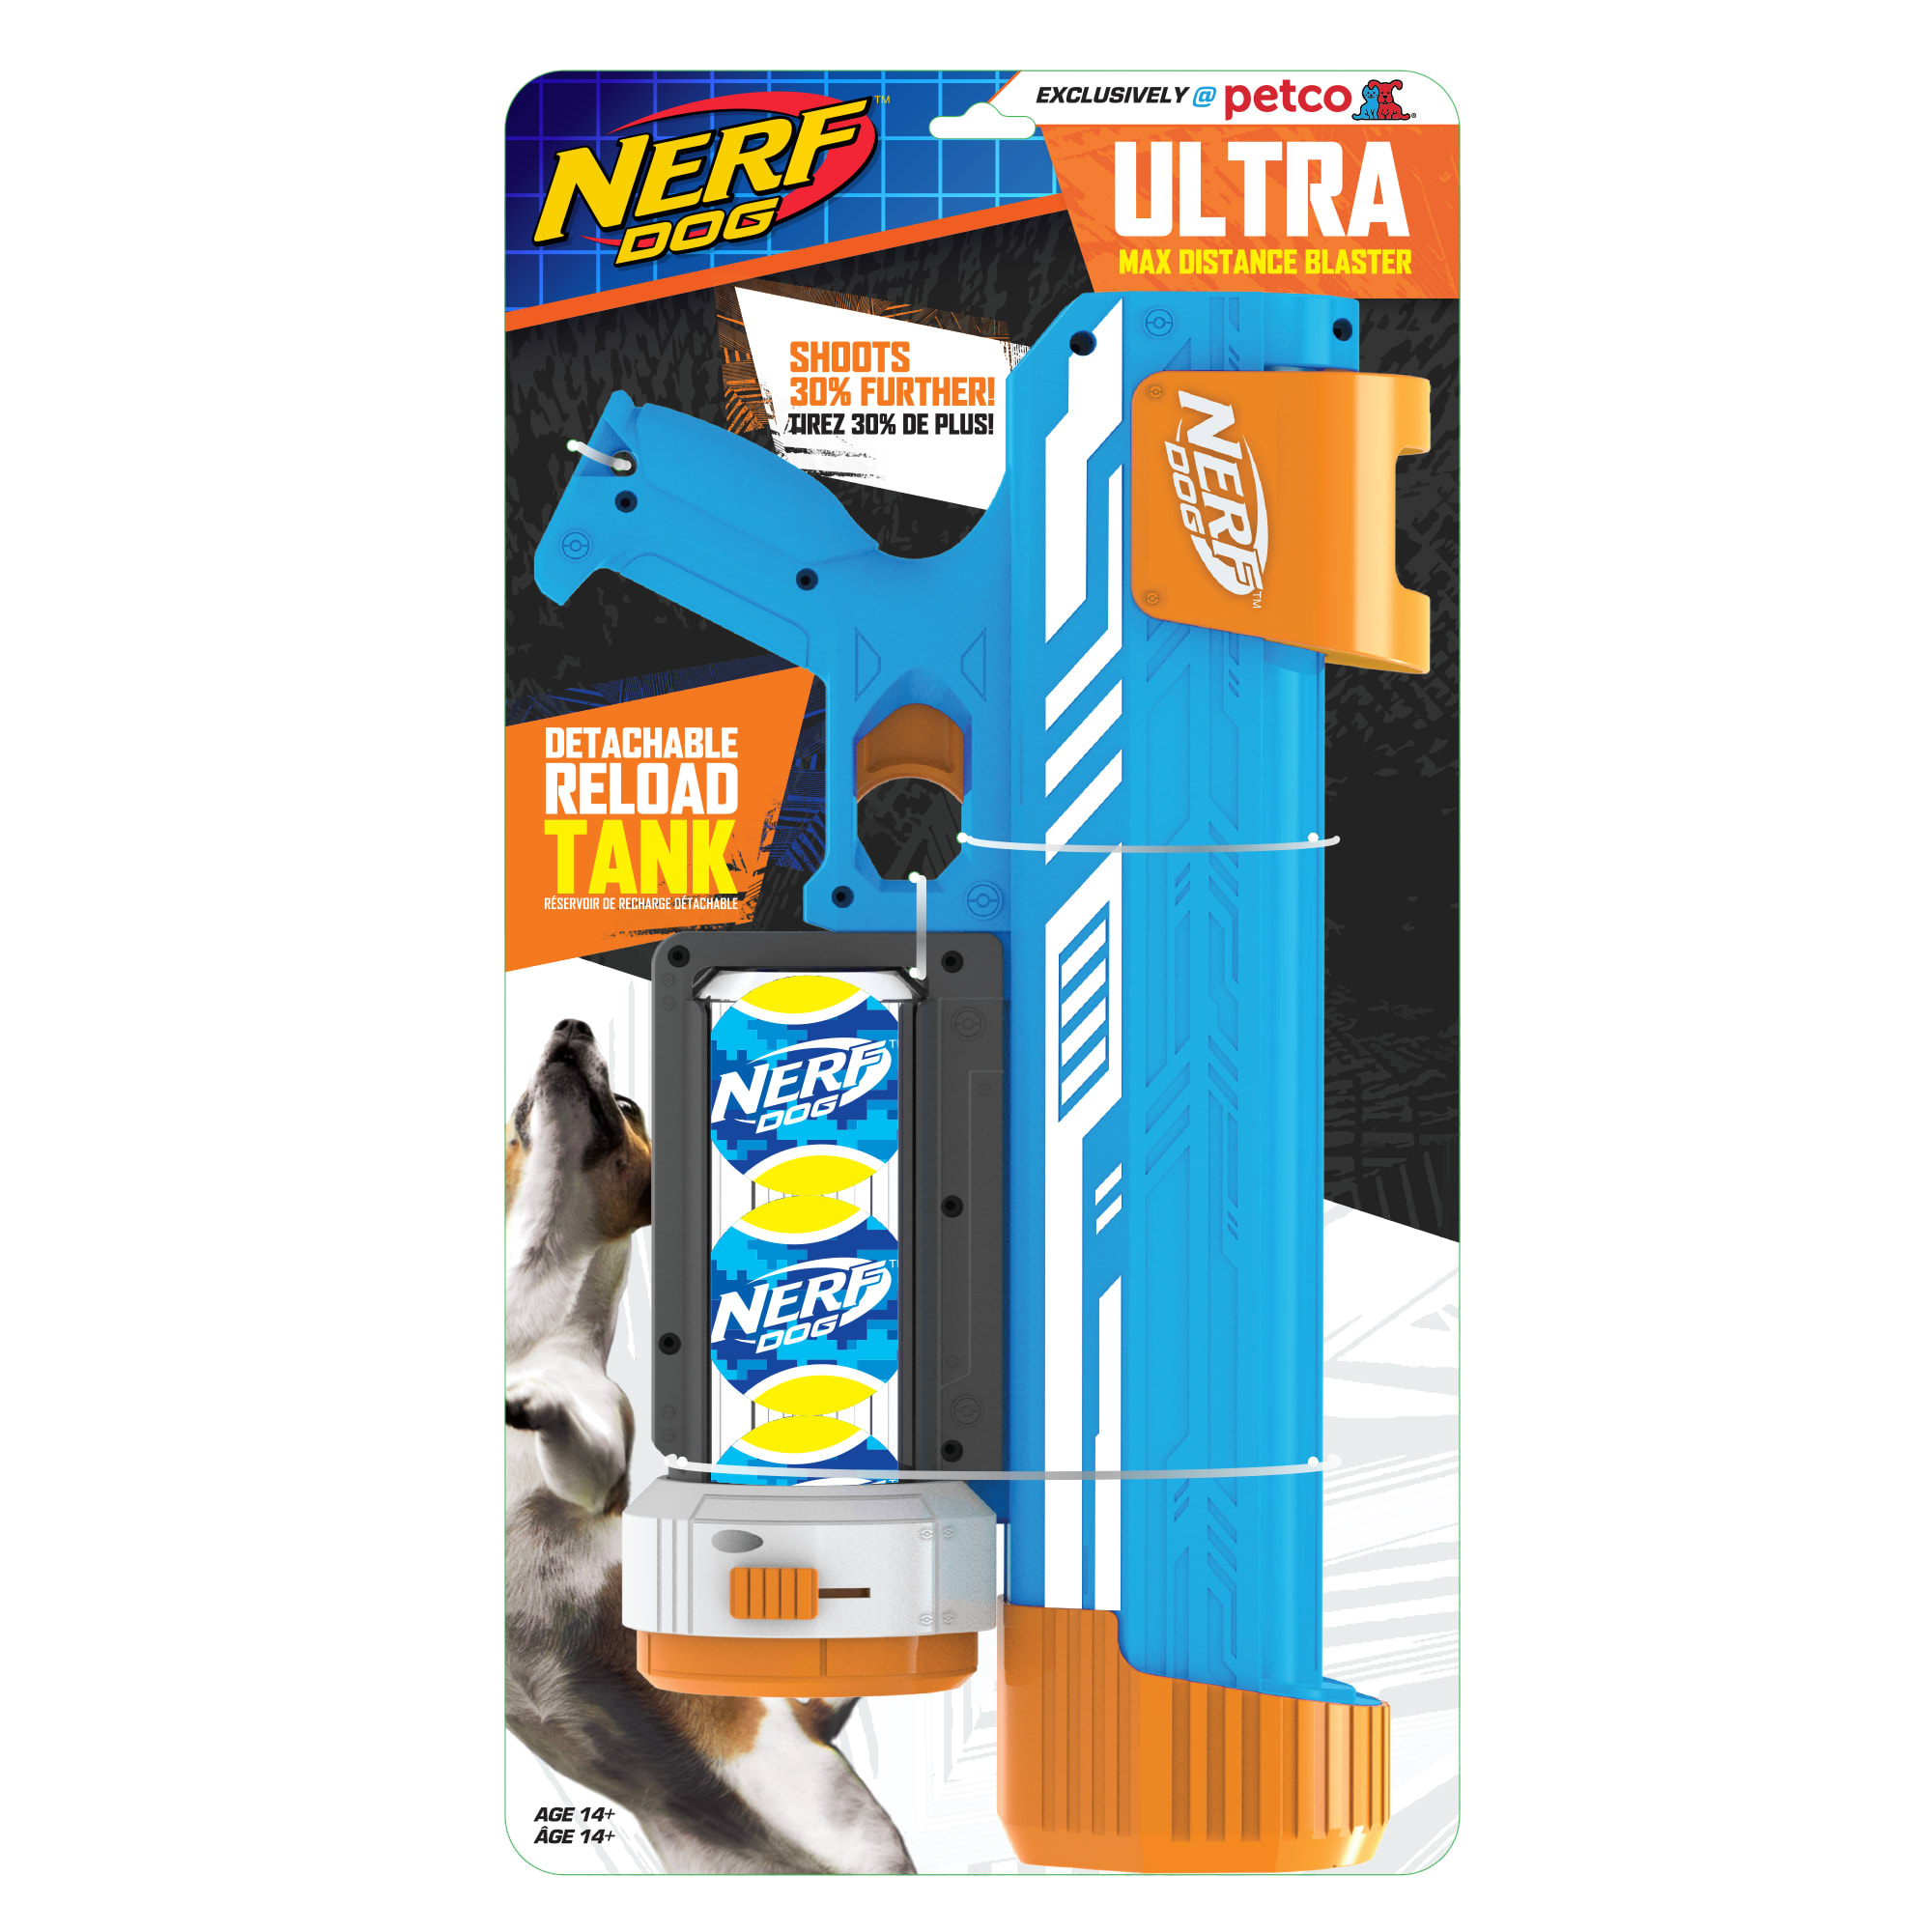 Nerf Ultra 